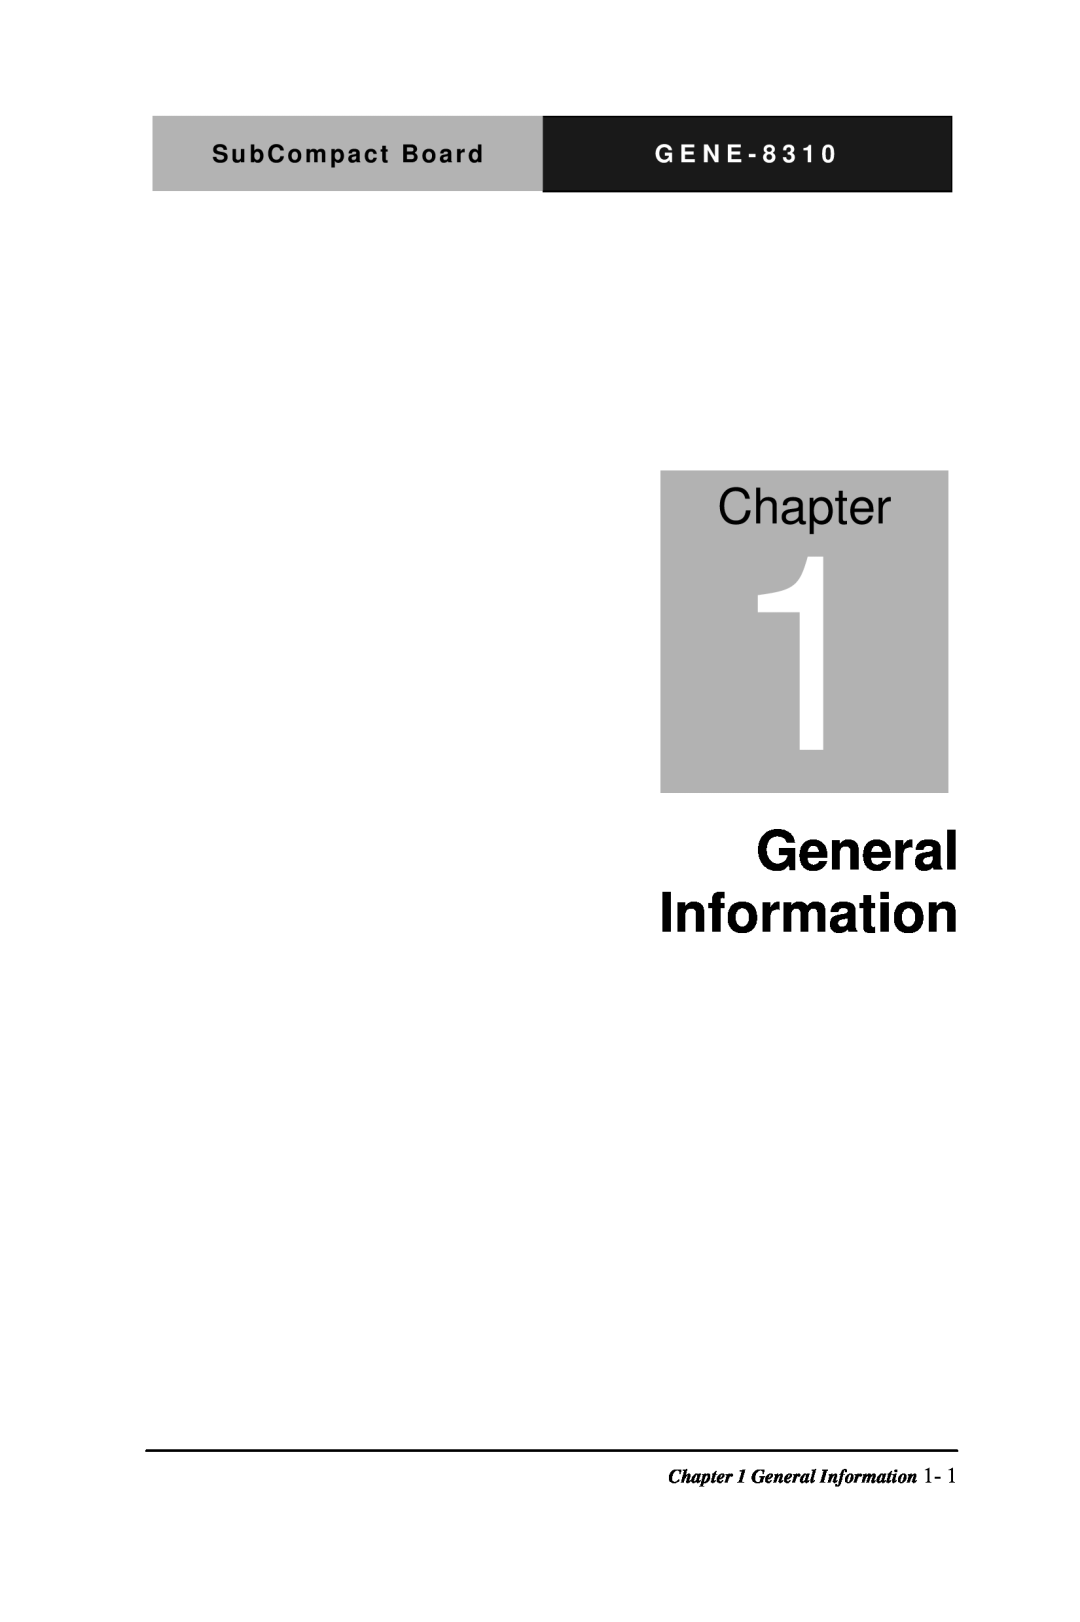 Intel GENE-8310 manual Chapter, SubCompact Board, G E N E - 8 3 1, General Information 1 